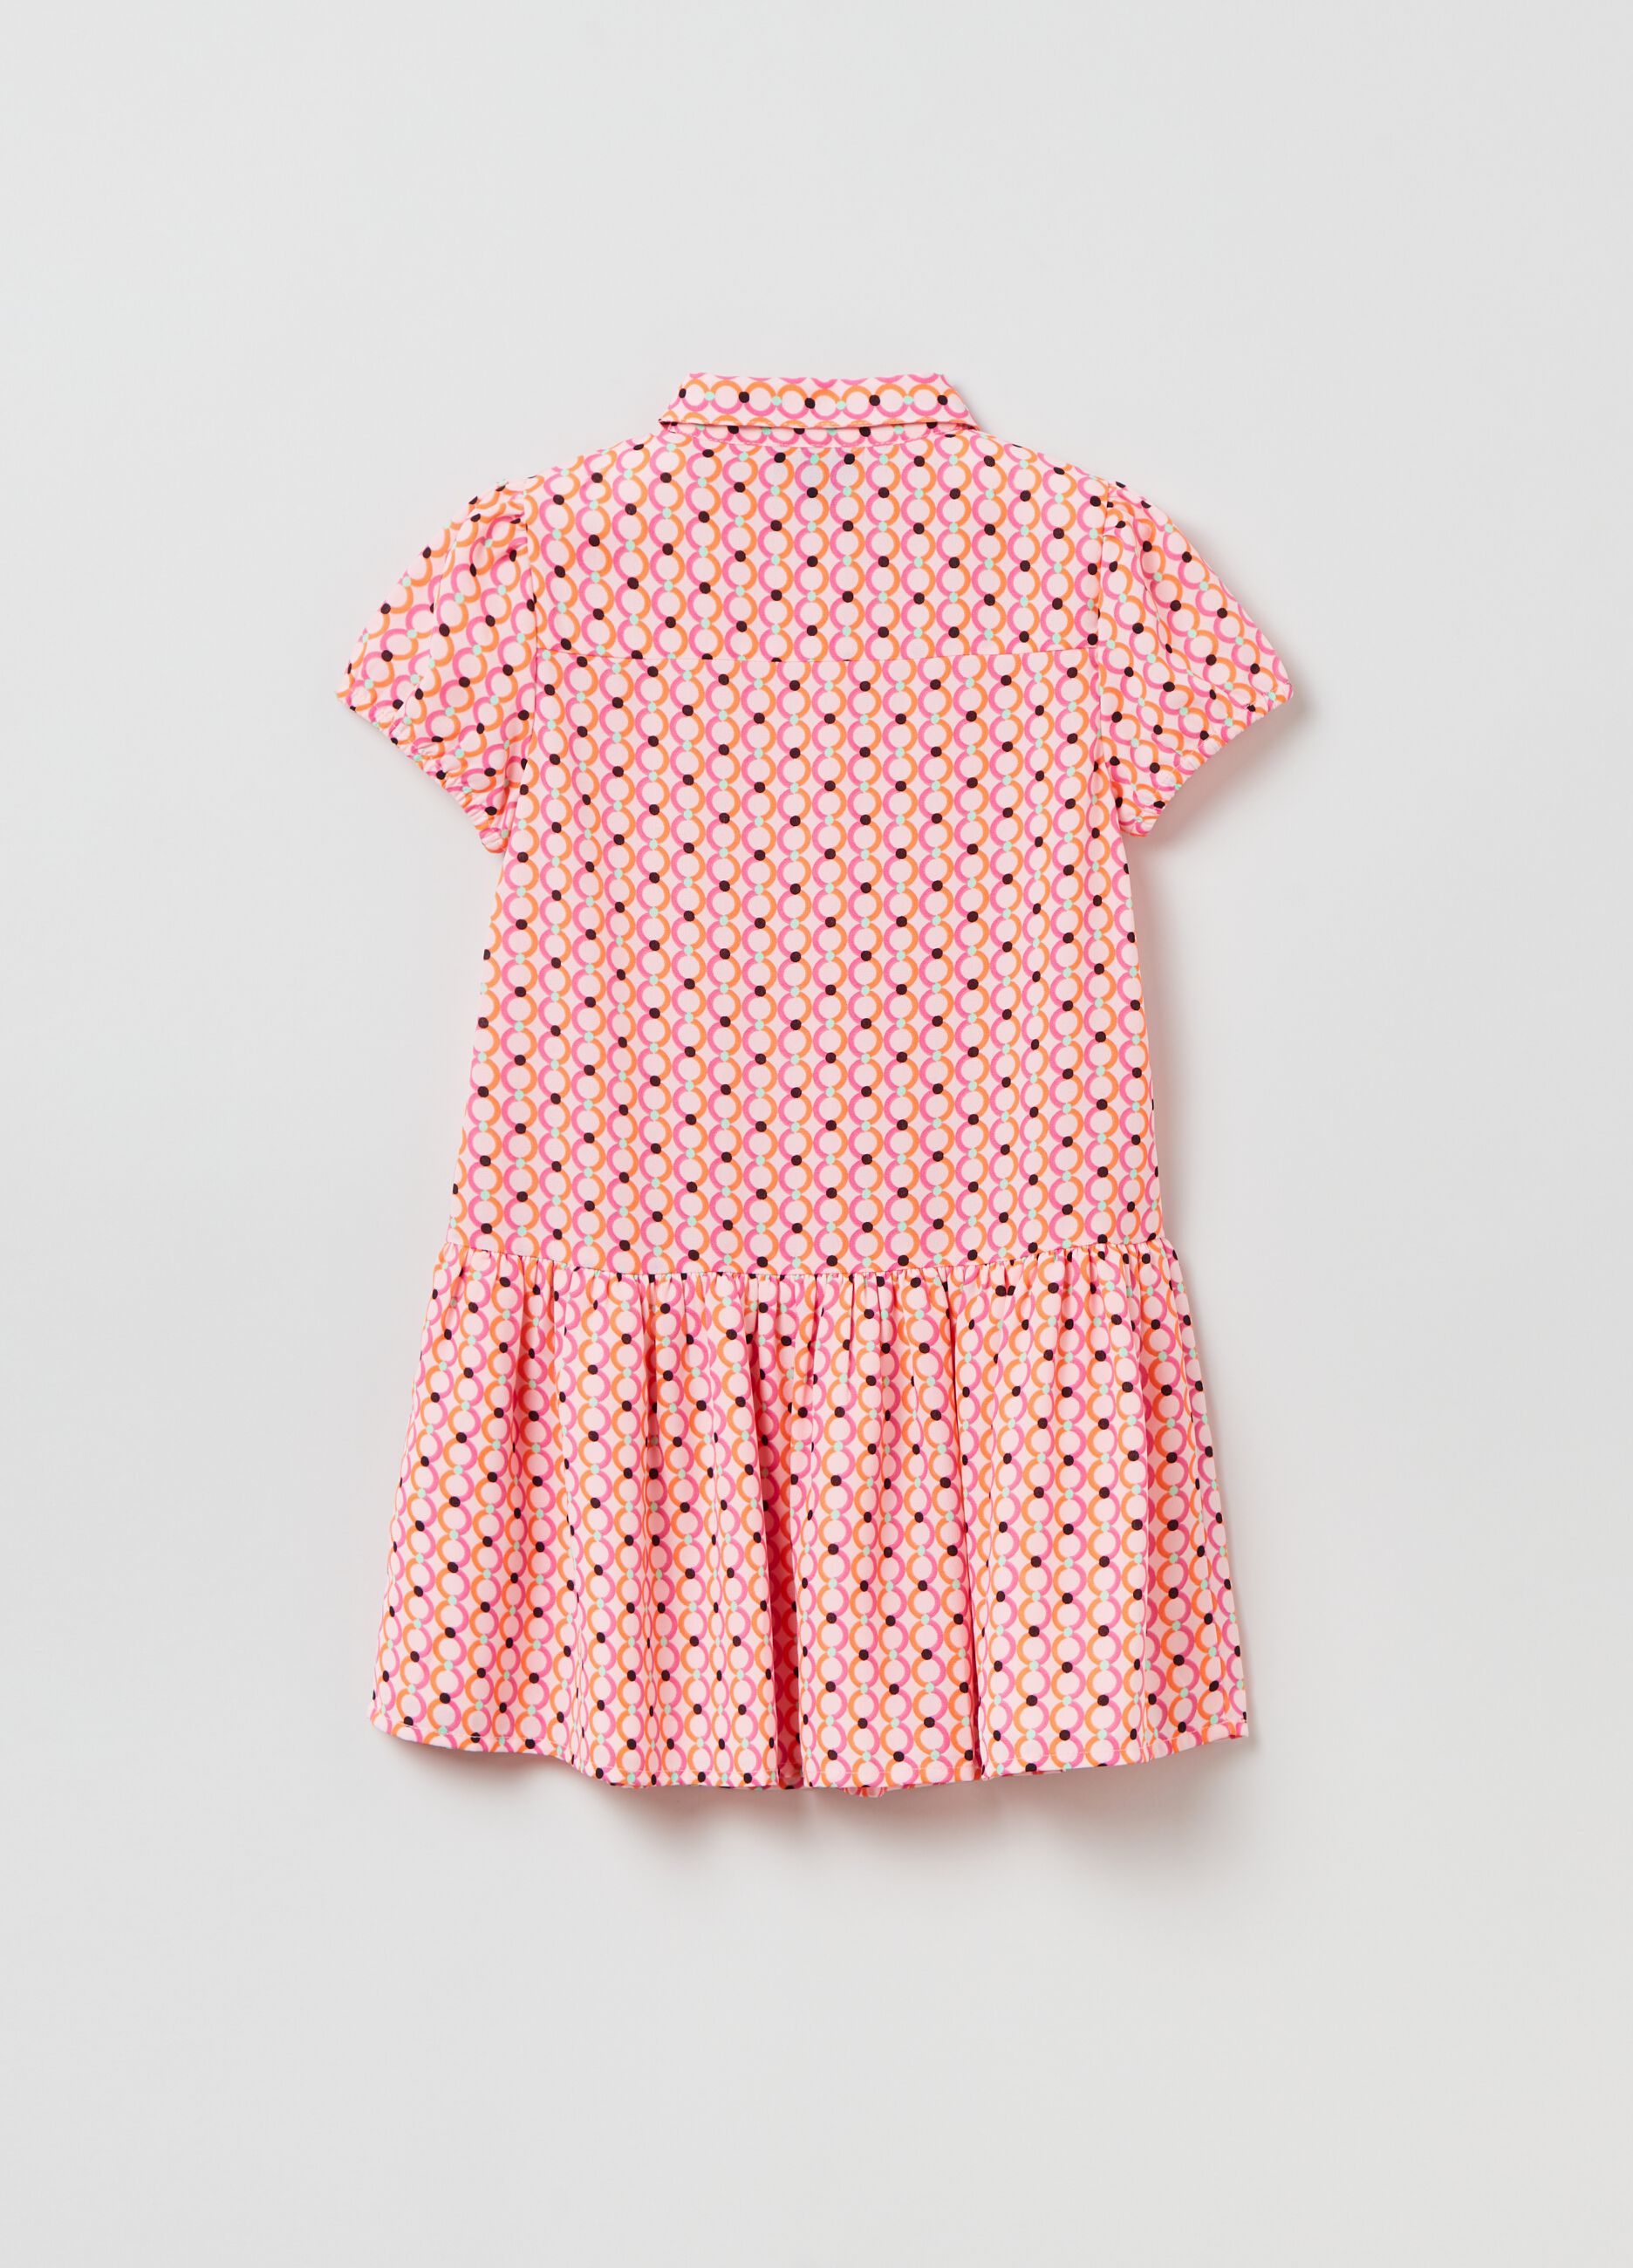 Shirt dress with geometric print